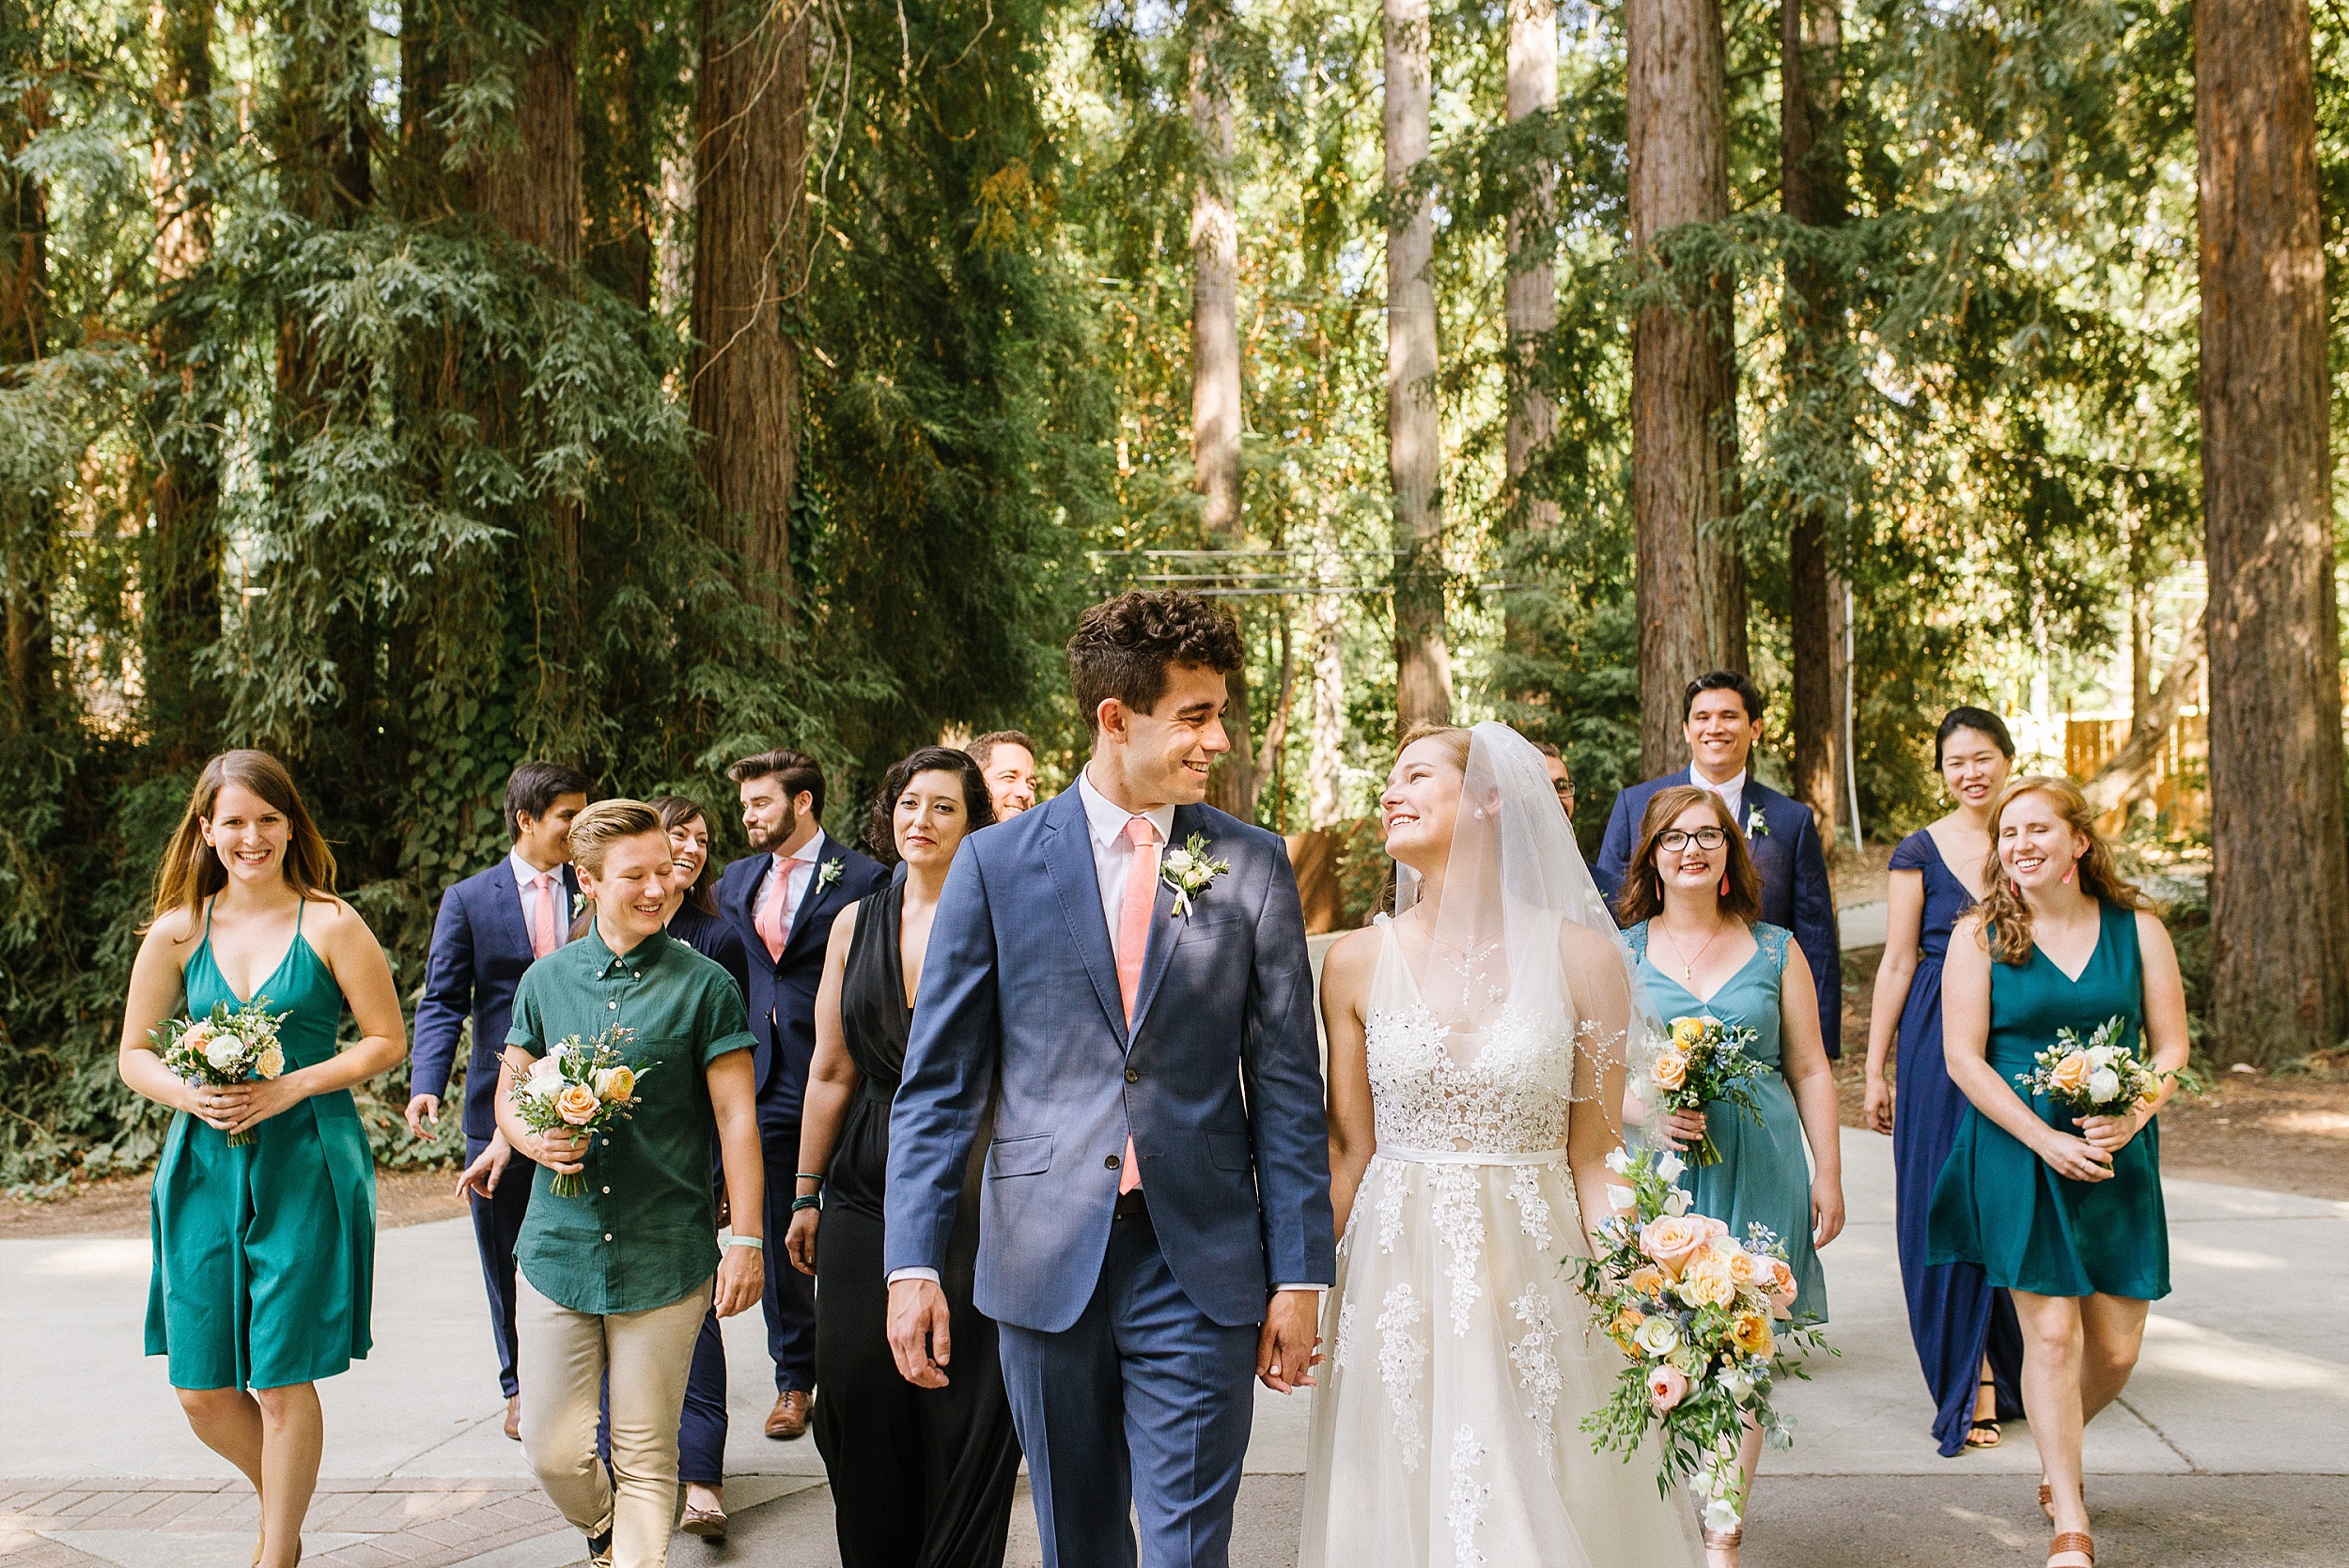 Amphitheatre-of-the-Redwoods-wedding-erikariley_chelsea-dier-photography_0058.jpg